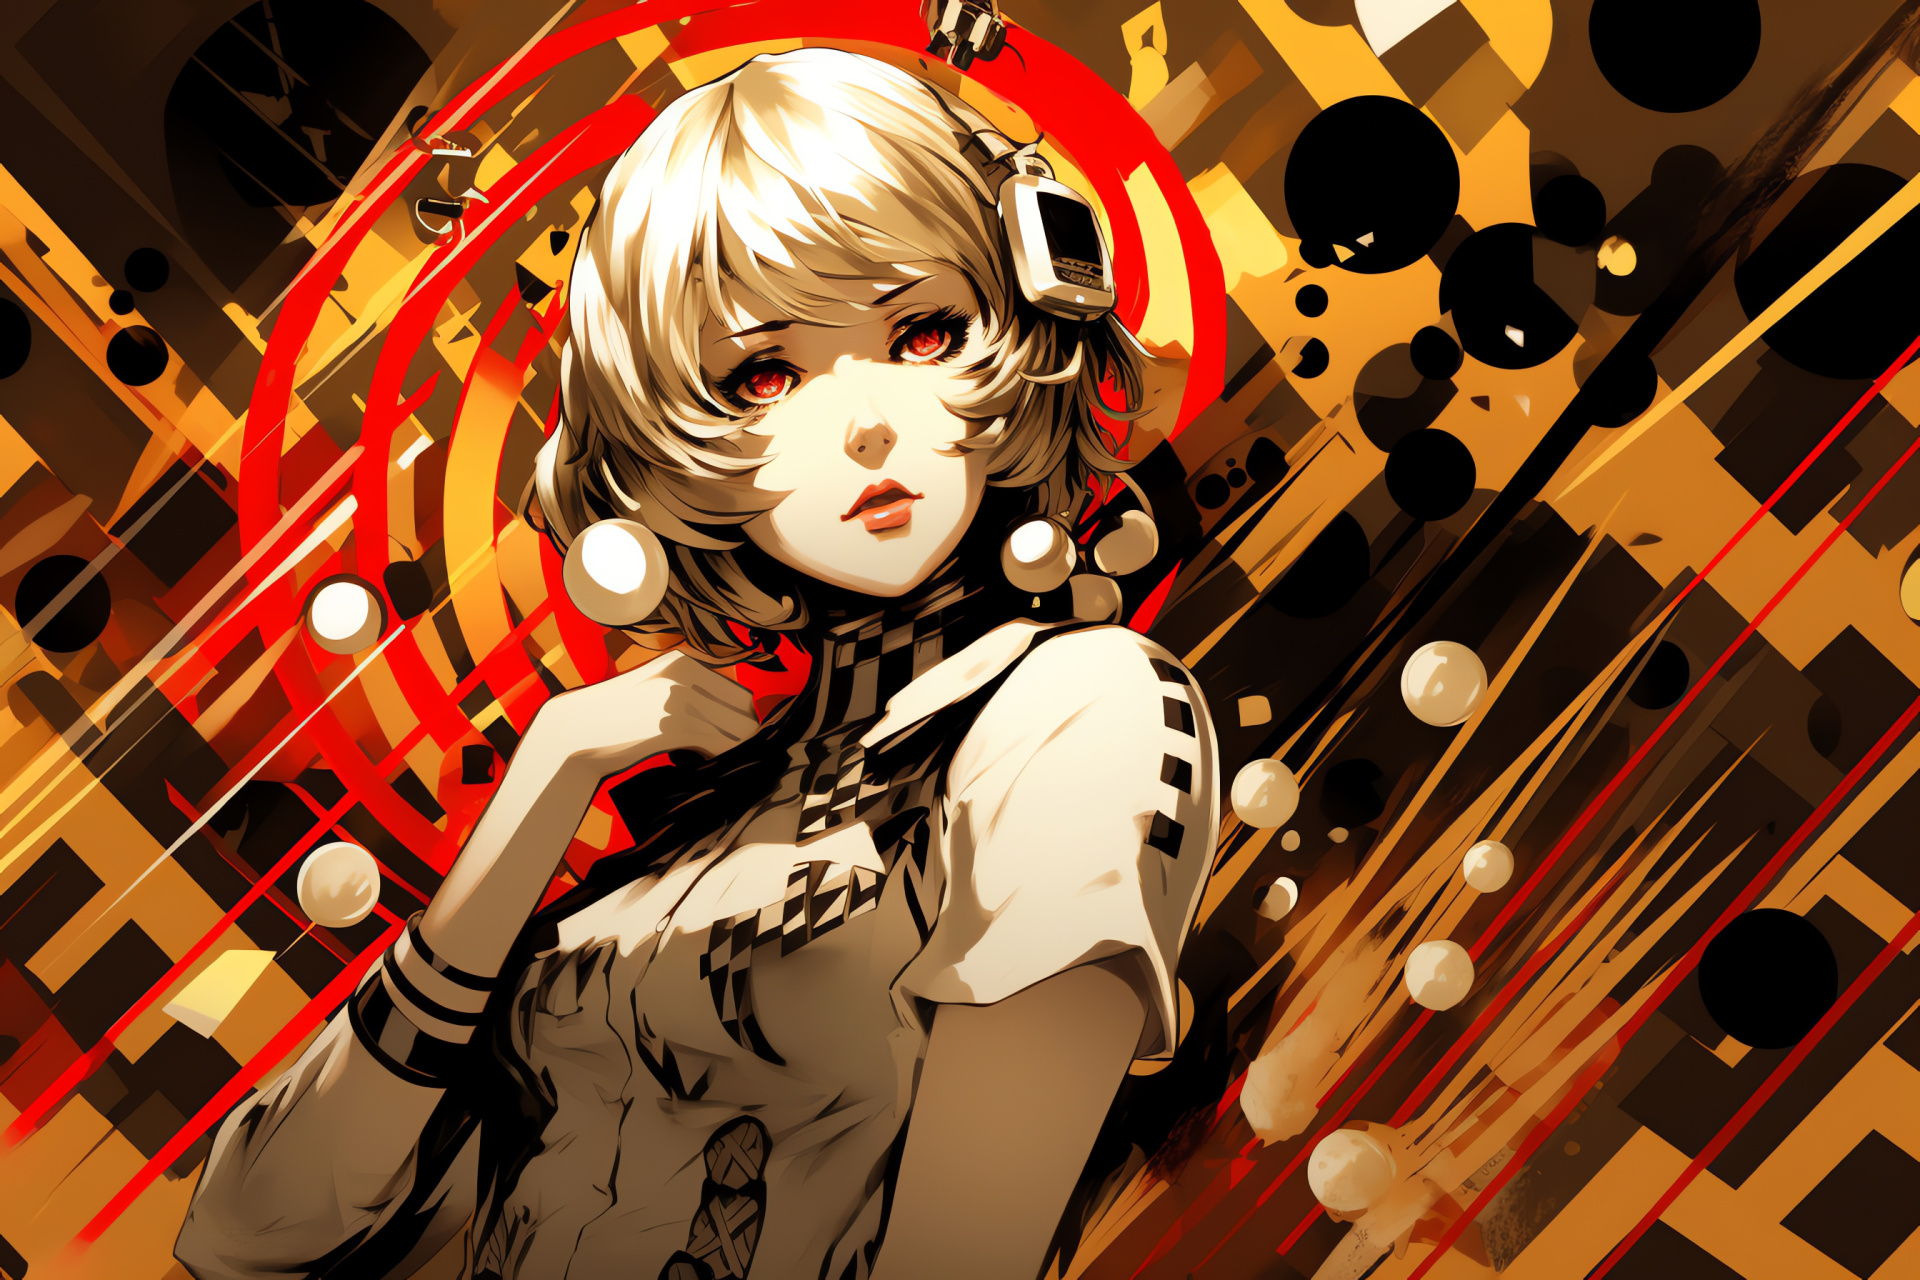 Persona 3 character Aigis, aureate gaze, inquisitive demeanor, ornithological cage, abstract motifs, HD Desktop Wallpaper